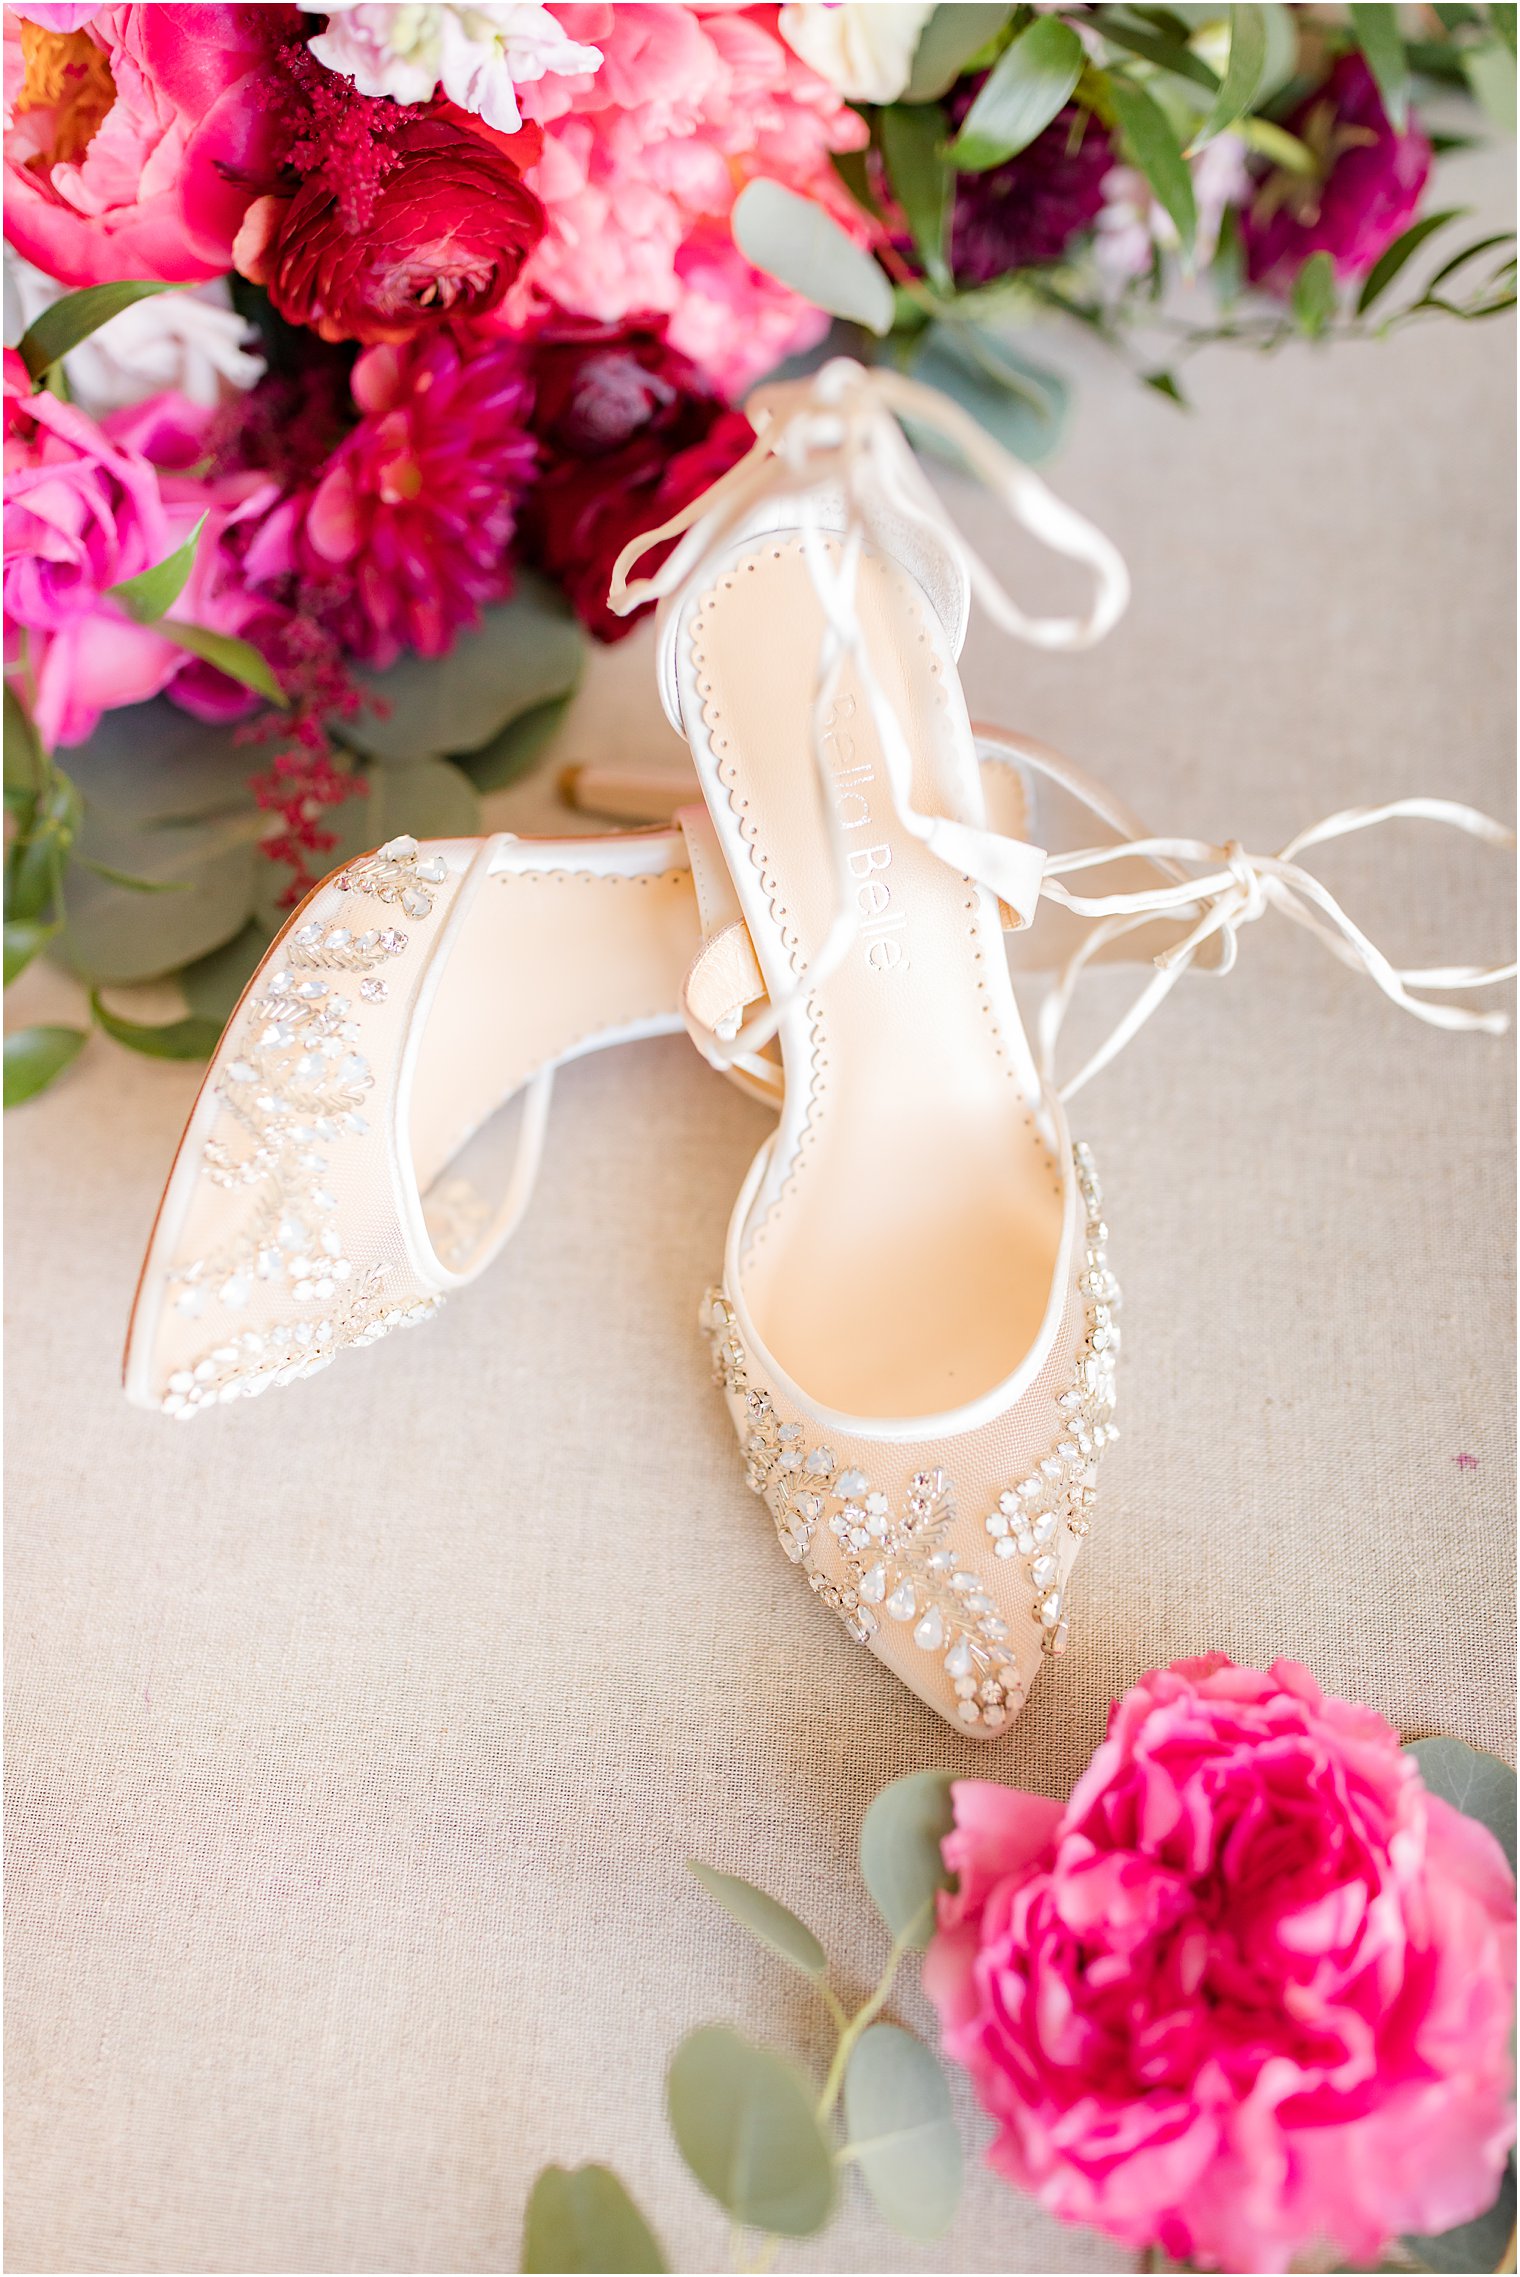 Bella belle bridal shoes